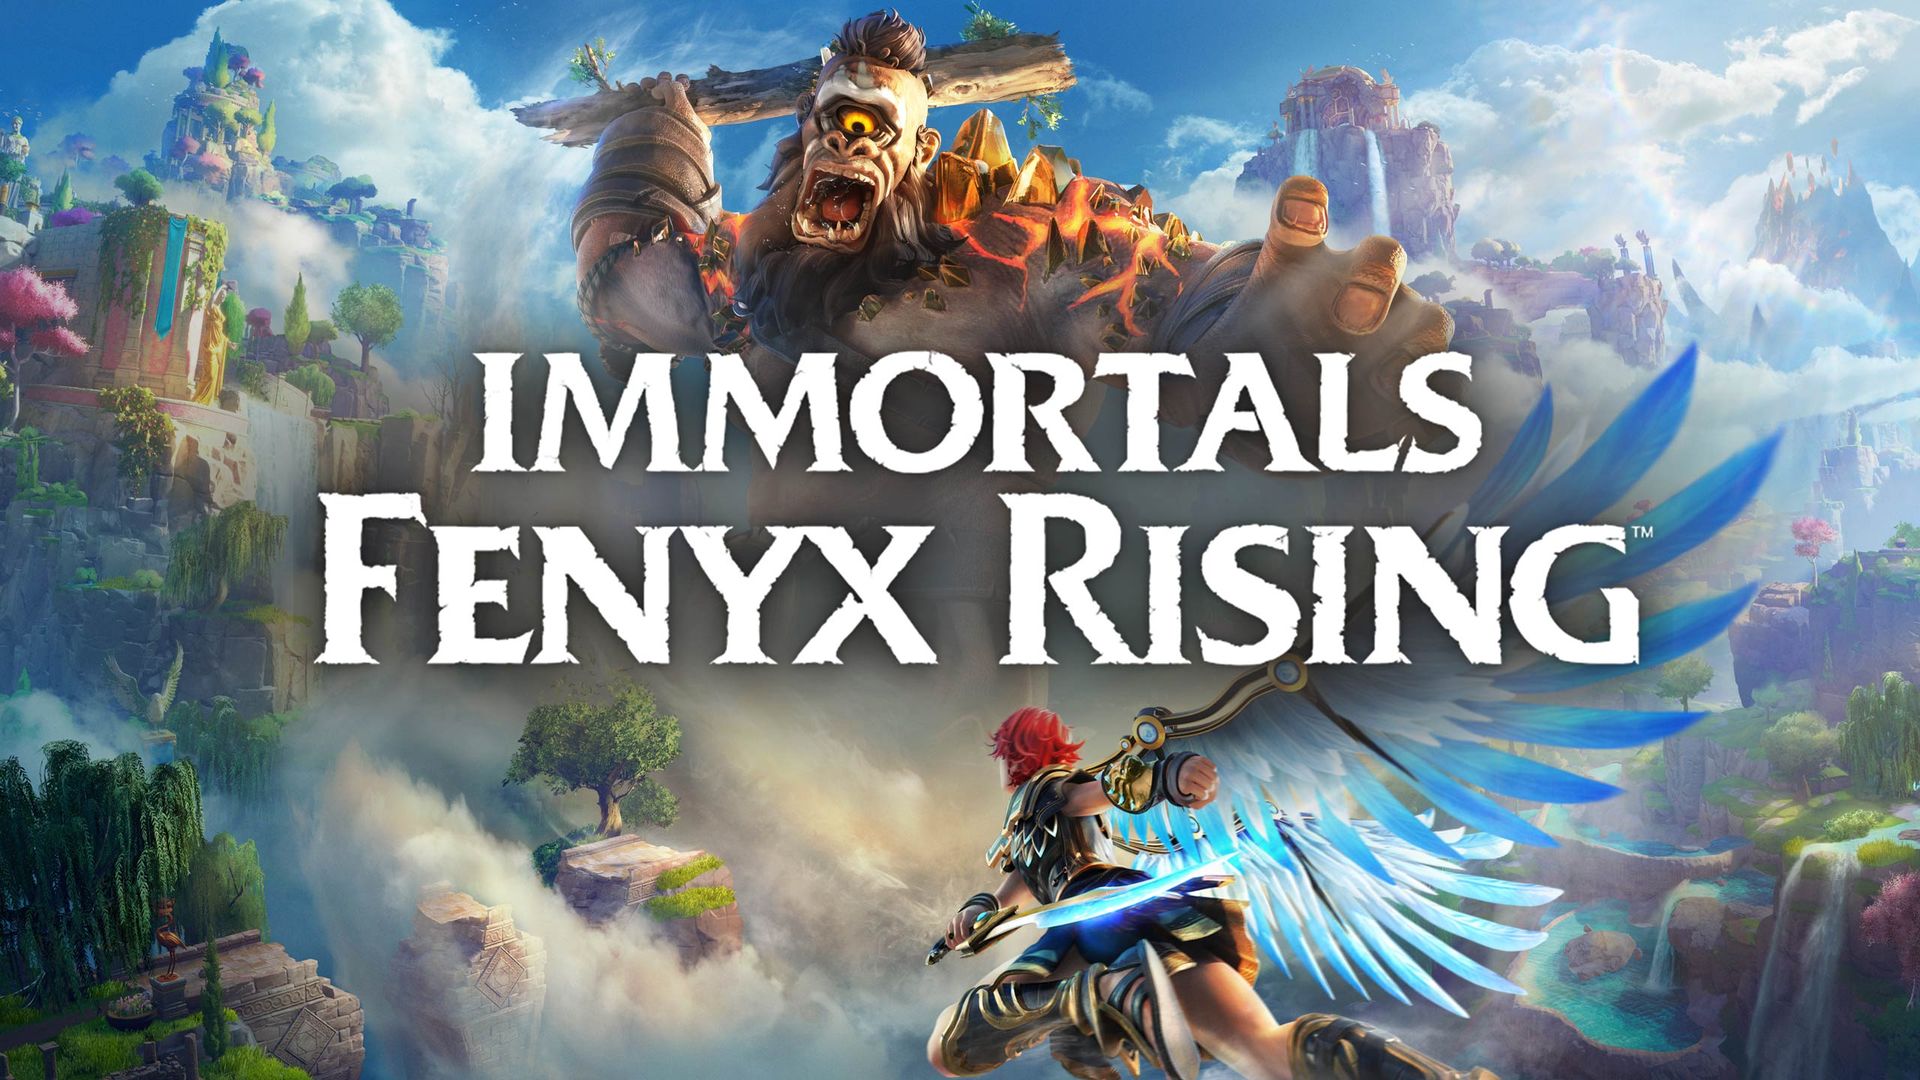 All Immortals Fenyx Rising achievements